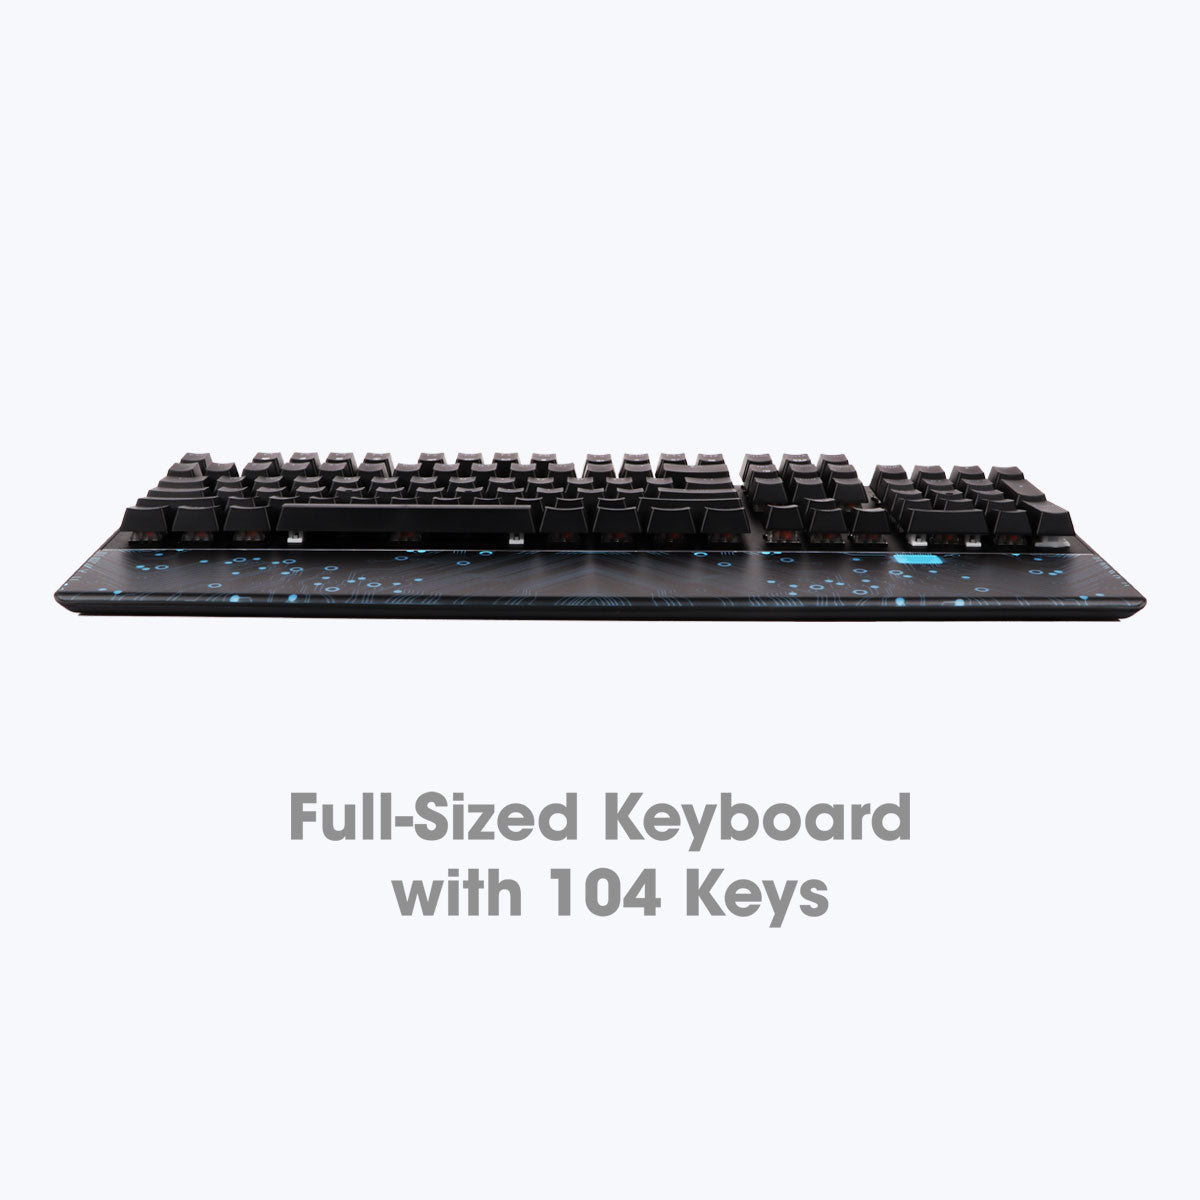 Zeb-Max Chroma - Premium Keyboard - Zebronics